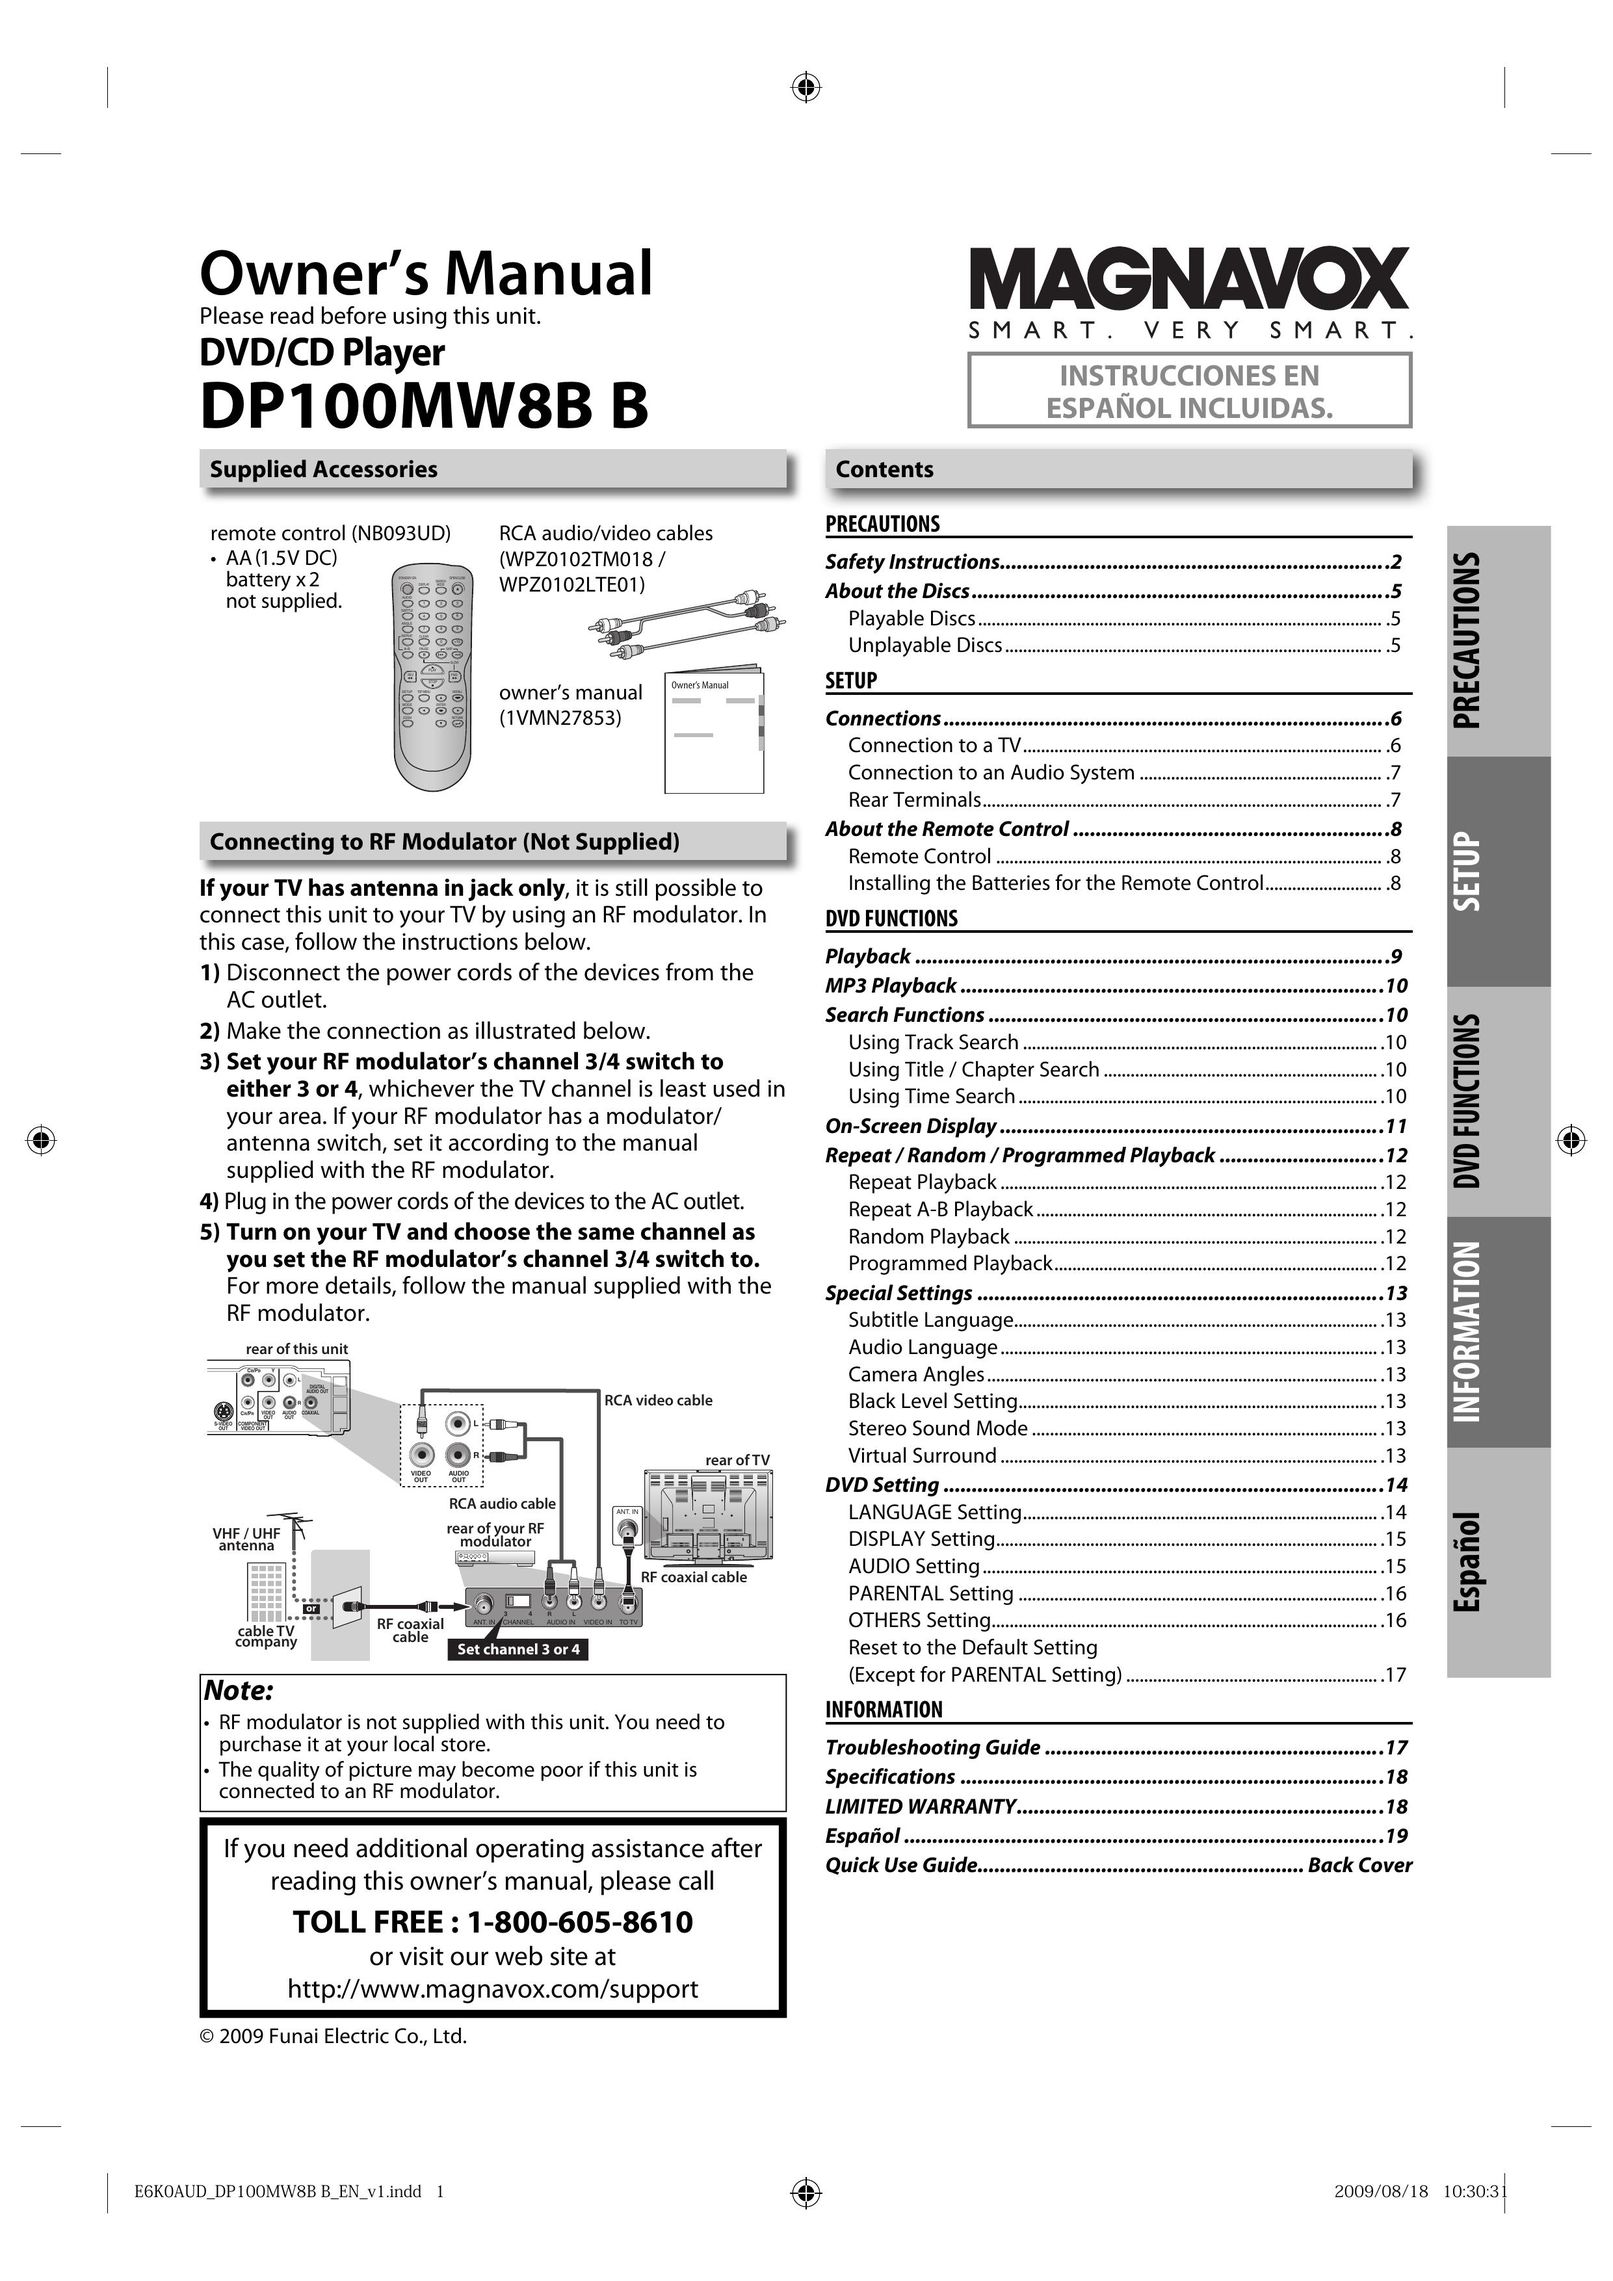 Magnavox DP100MW8B B DVD Player User Manual